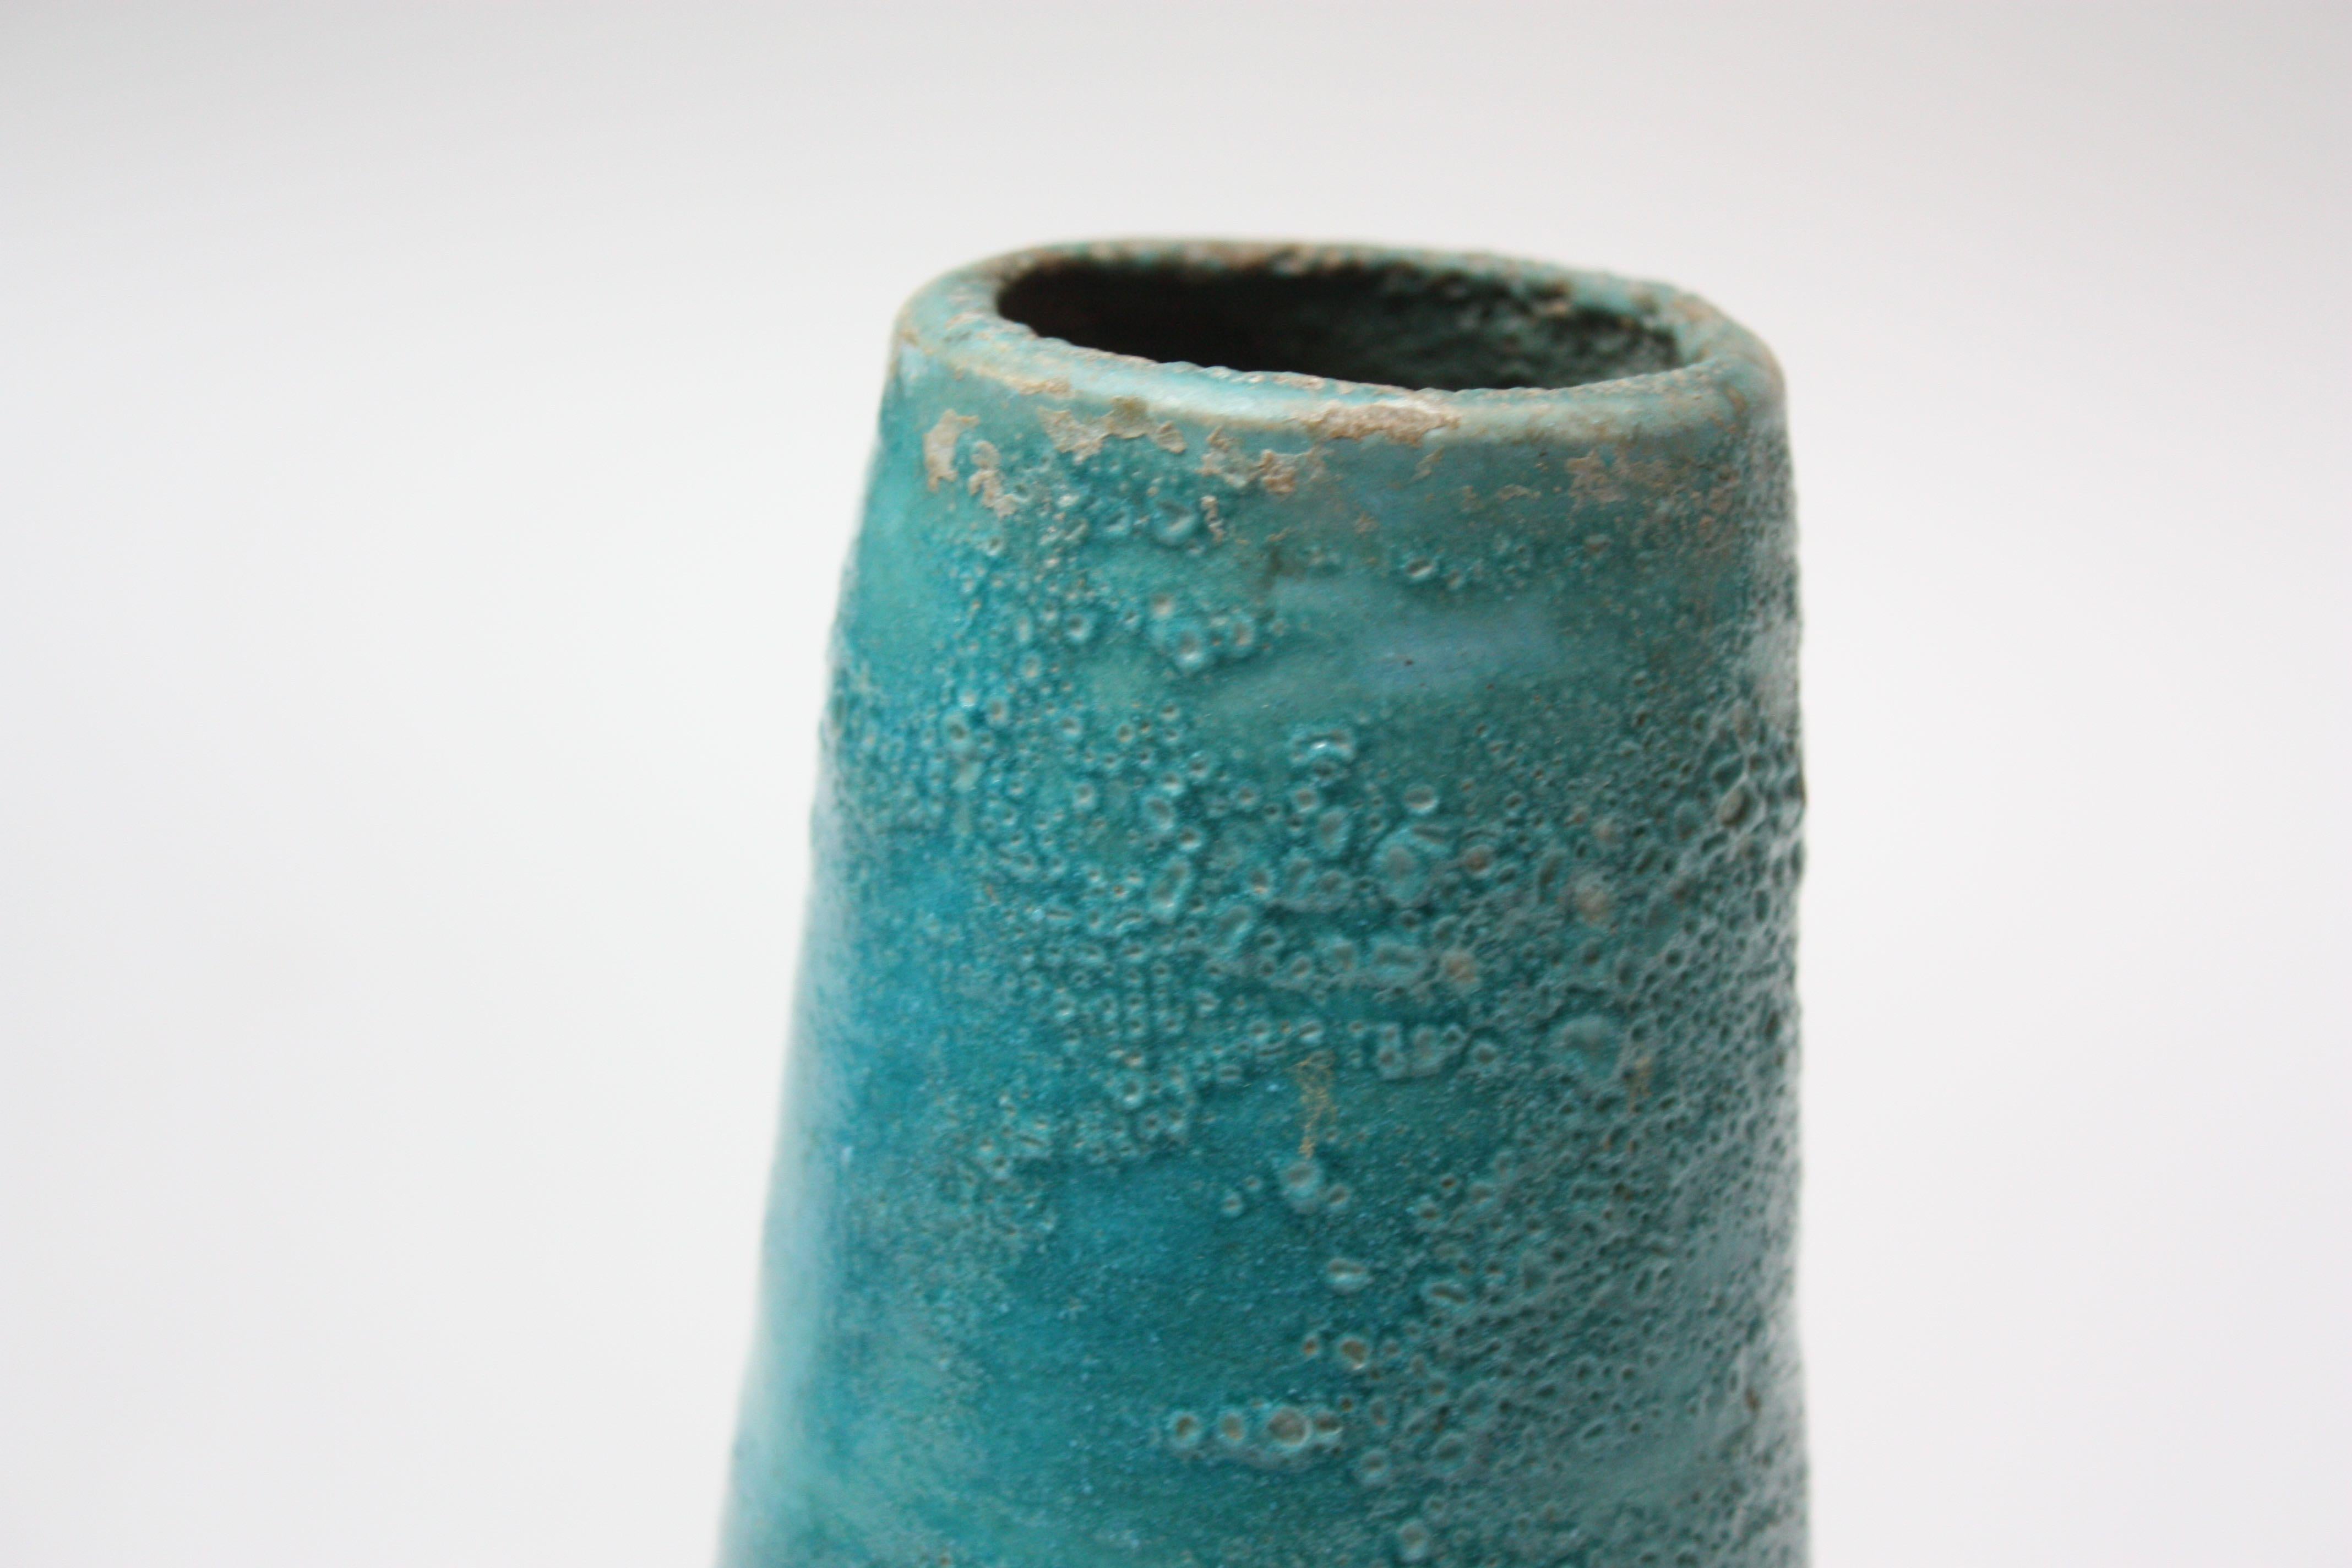 Studio Pottery Volcanic-Texture Vase by Mark Keram in Turquoise 2